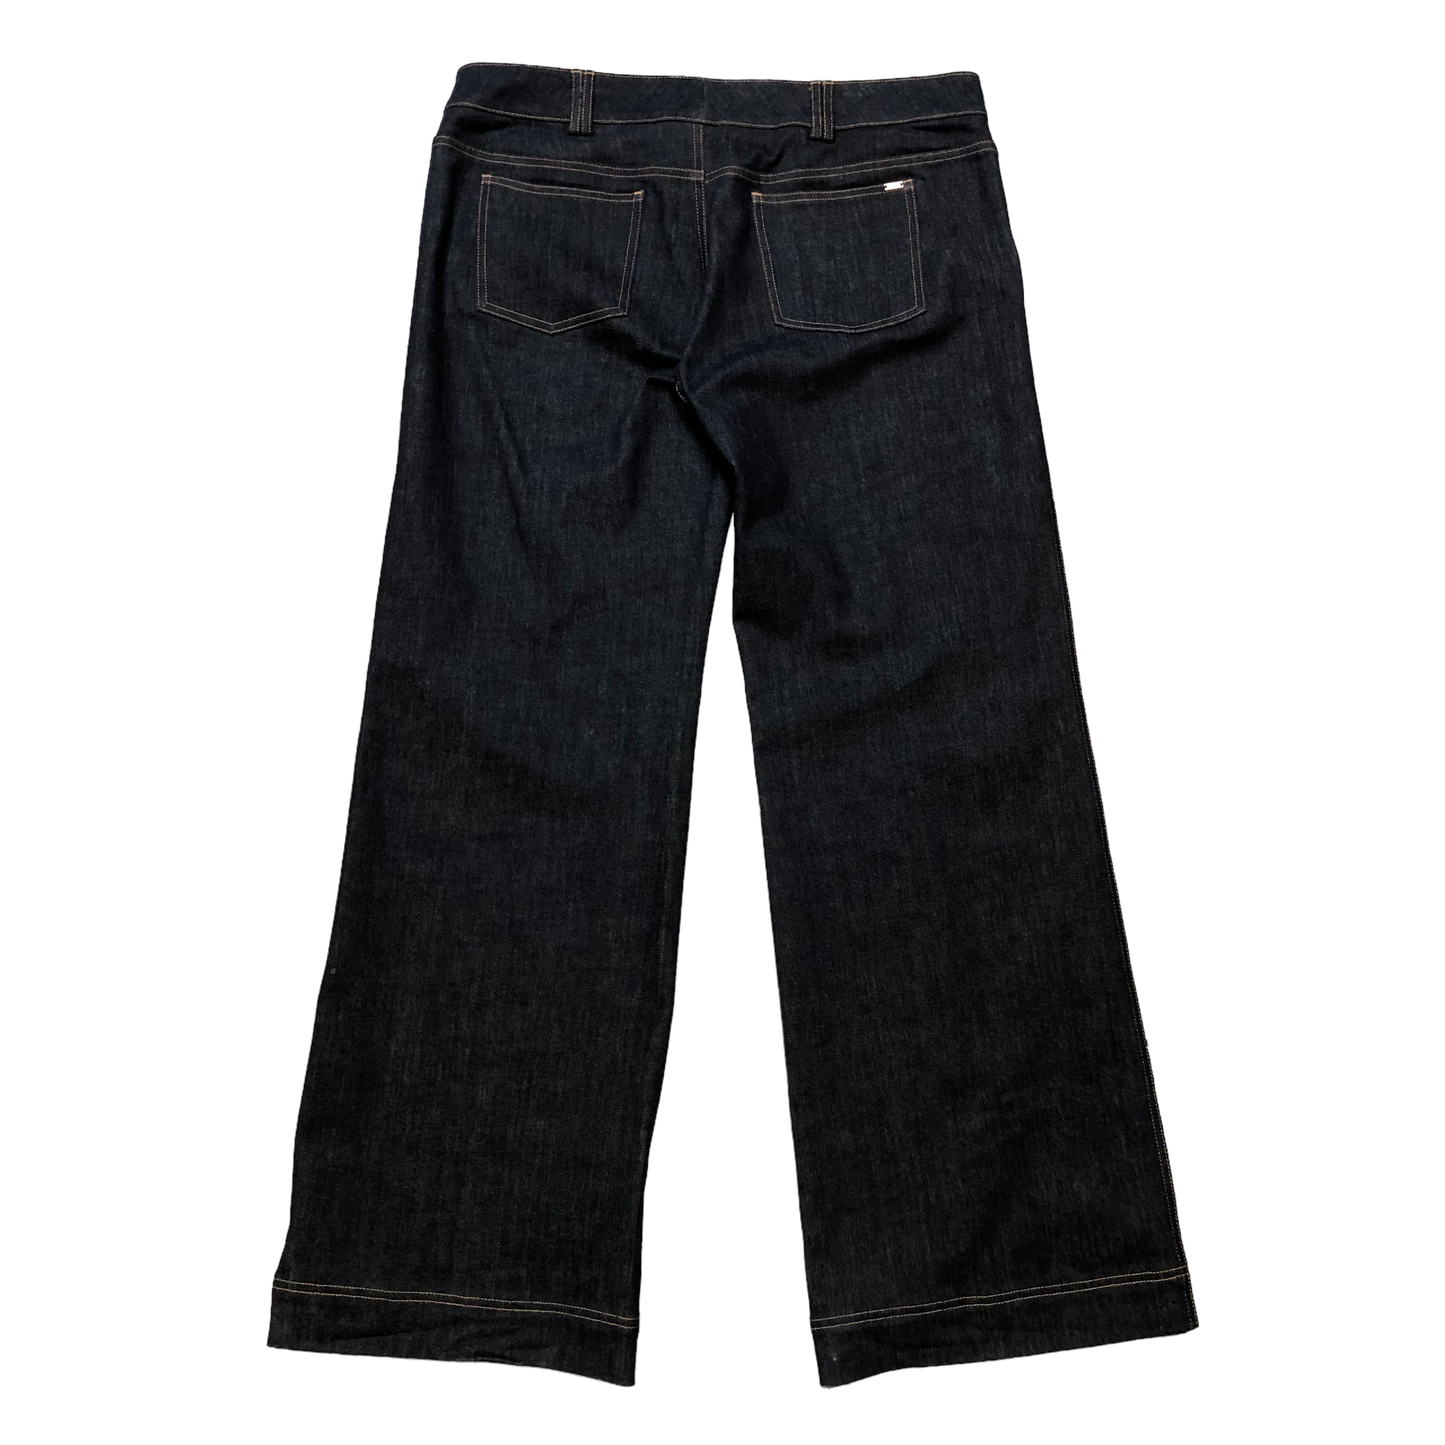 Jeans Designer By St. John  Size: 14